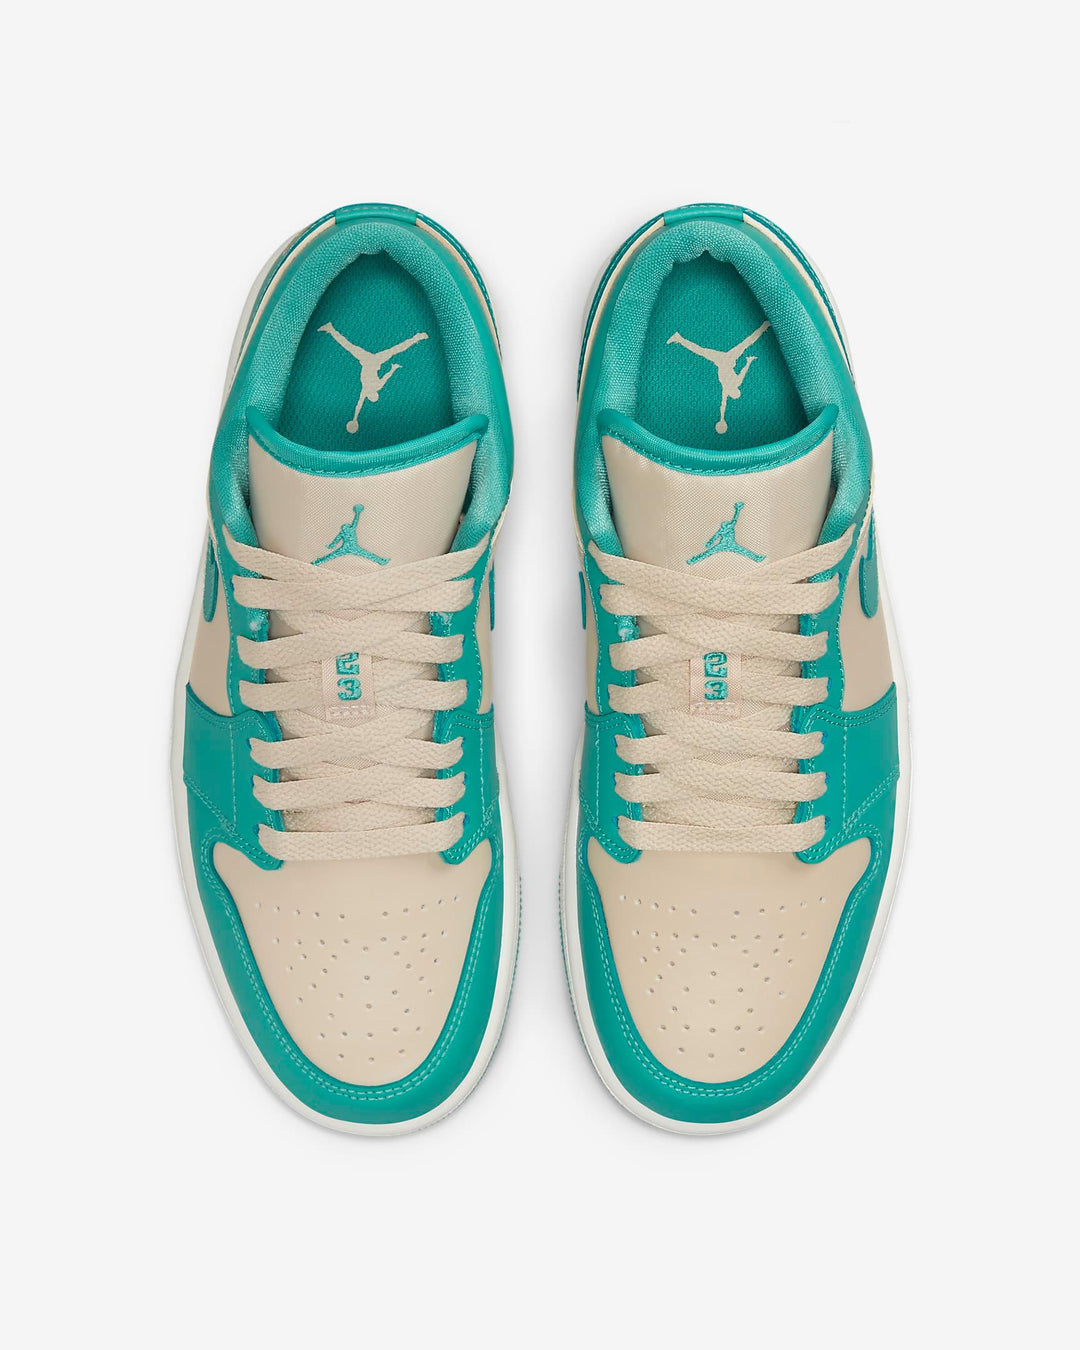 Giày Nike Air Jordan 1 Low Women Shoes #Washed Teal - Kallos Vietnam